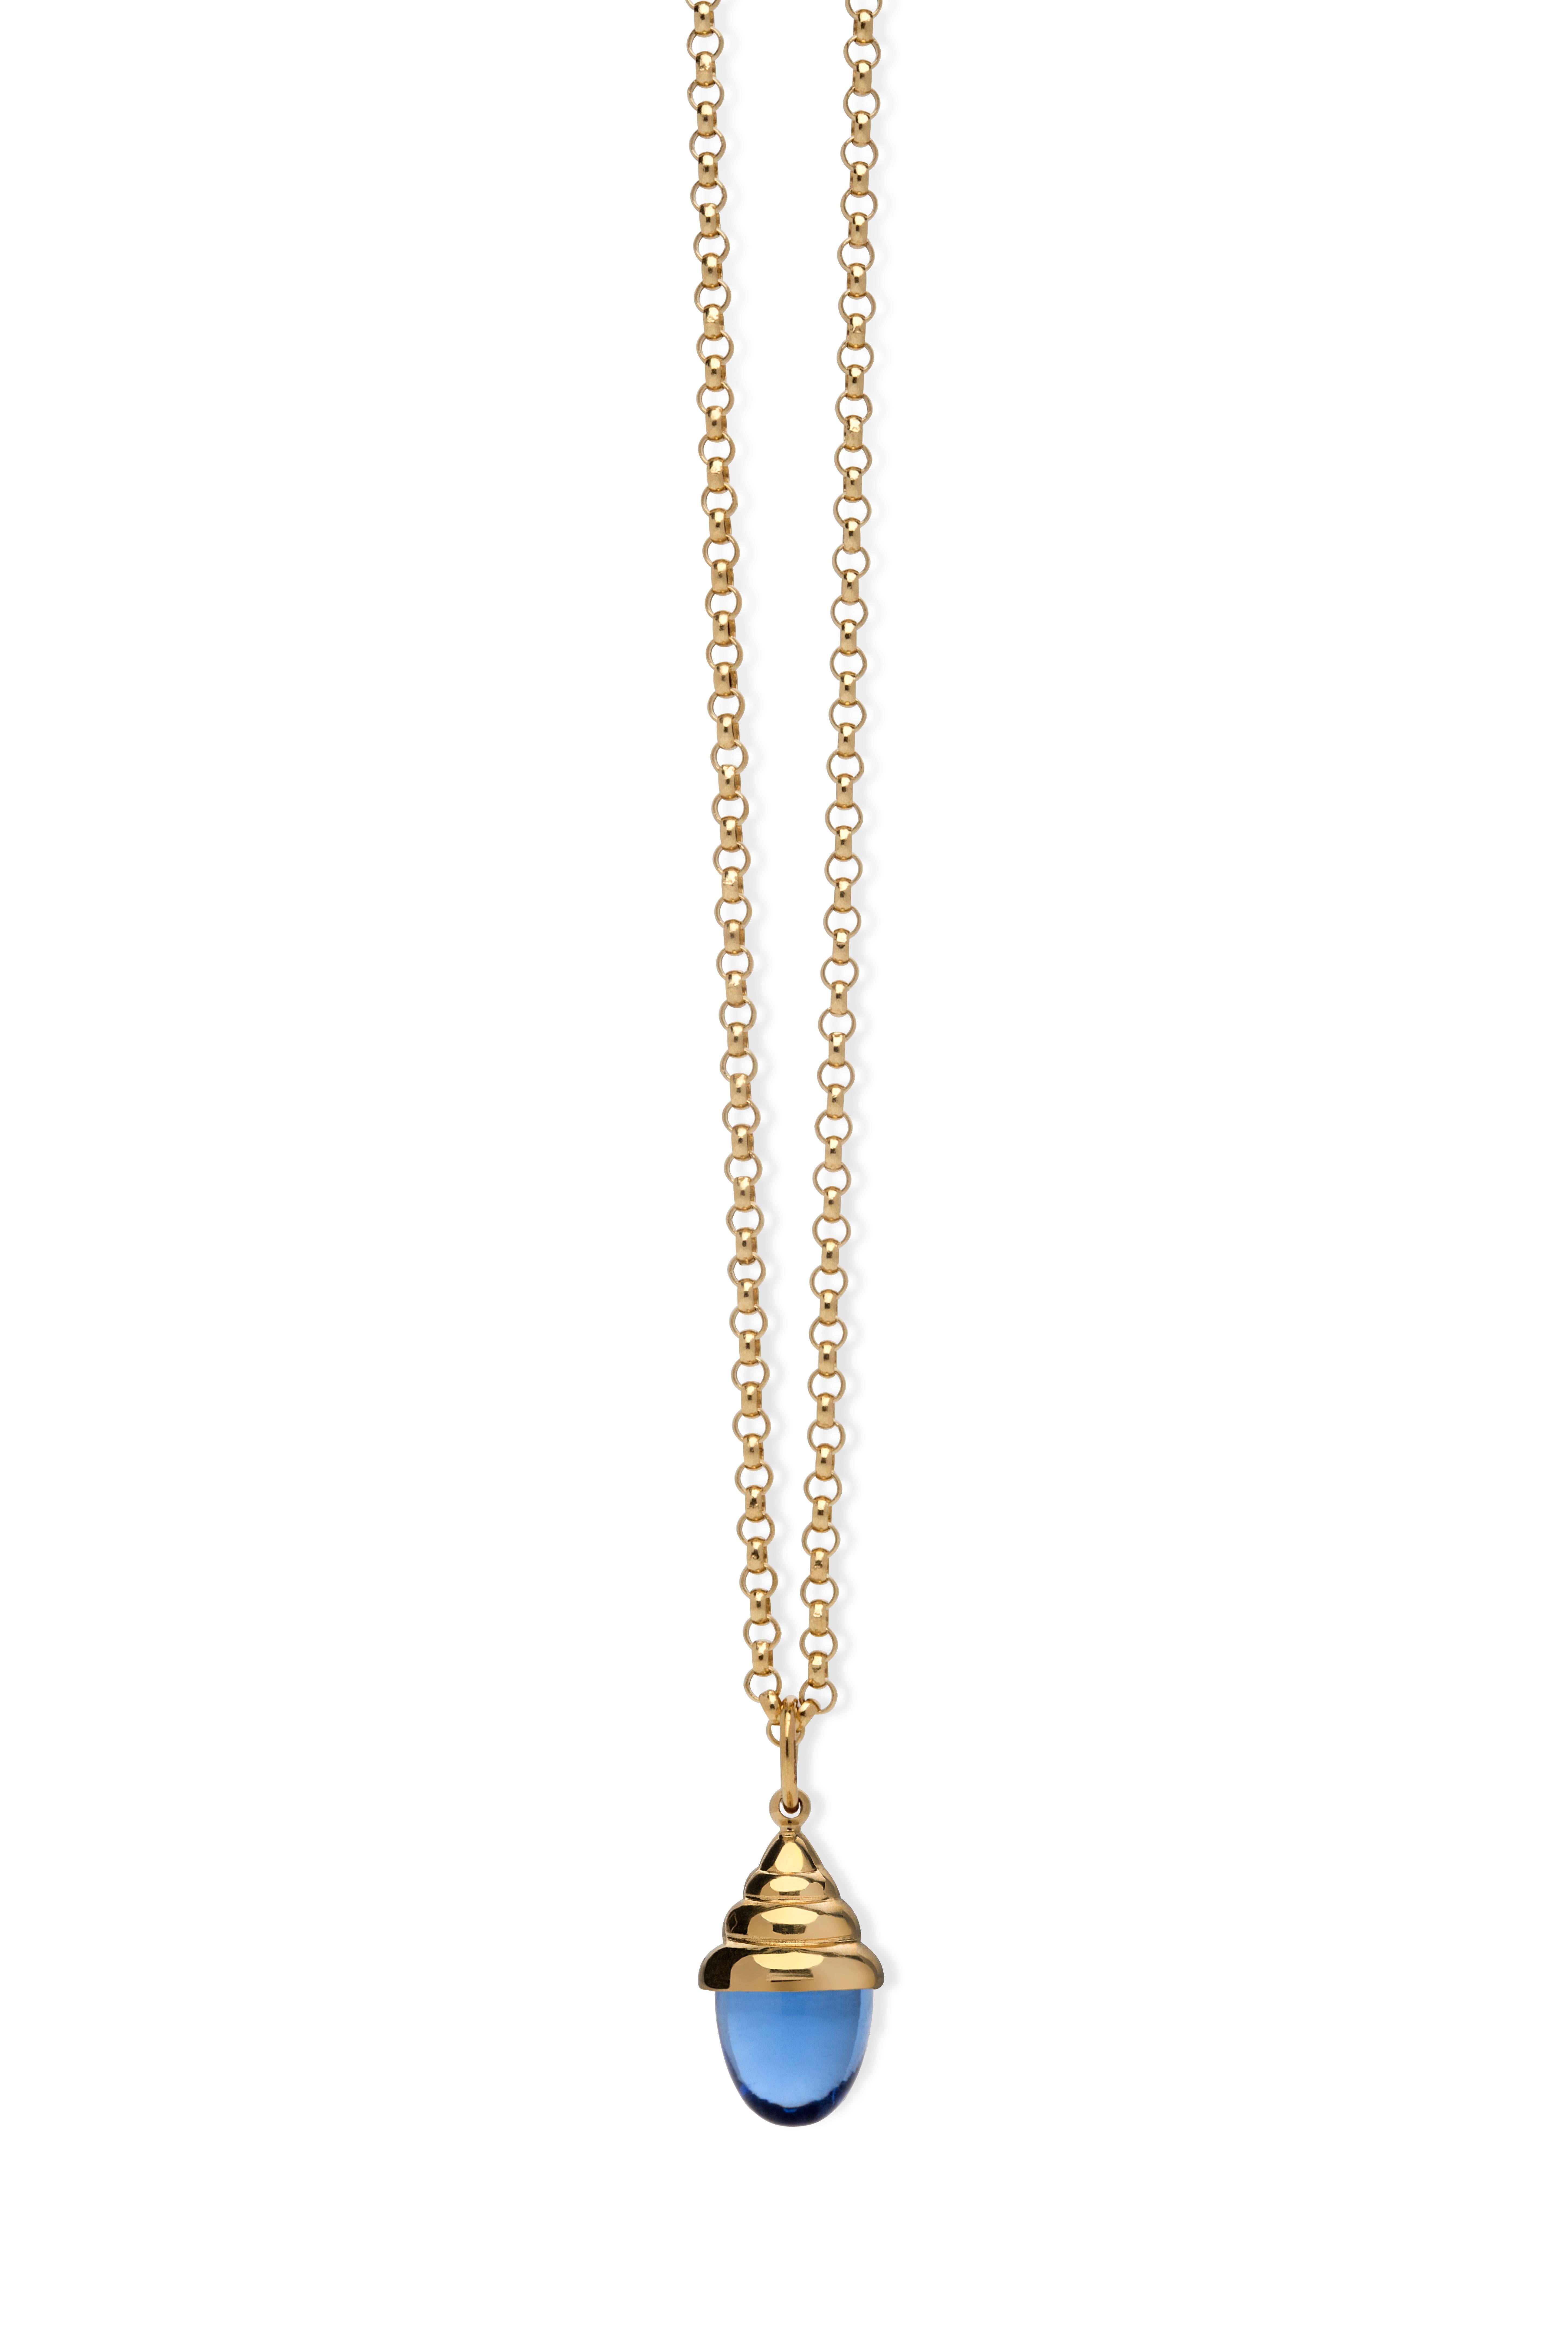 MAVIADA's Torba Modern Peridot Quartz 18 Karat Yellow Gold Drop Pendant Necklace For Sale 3